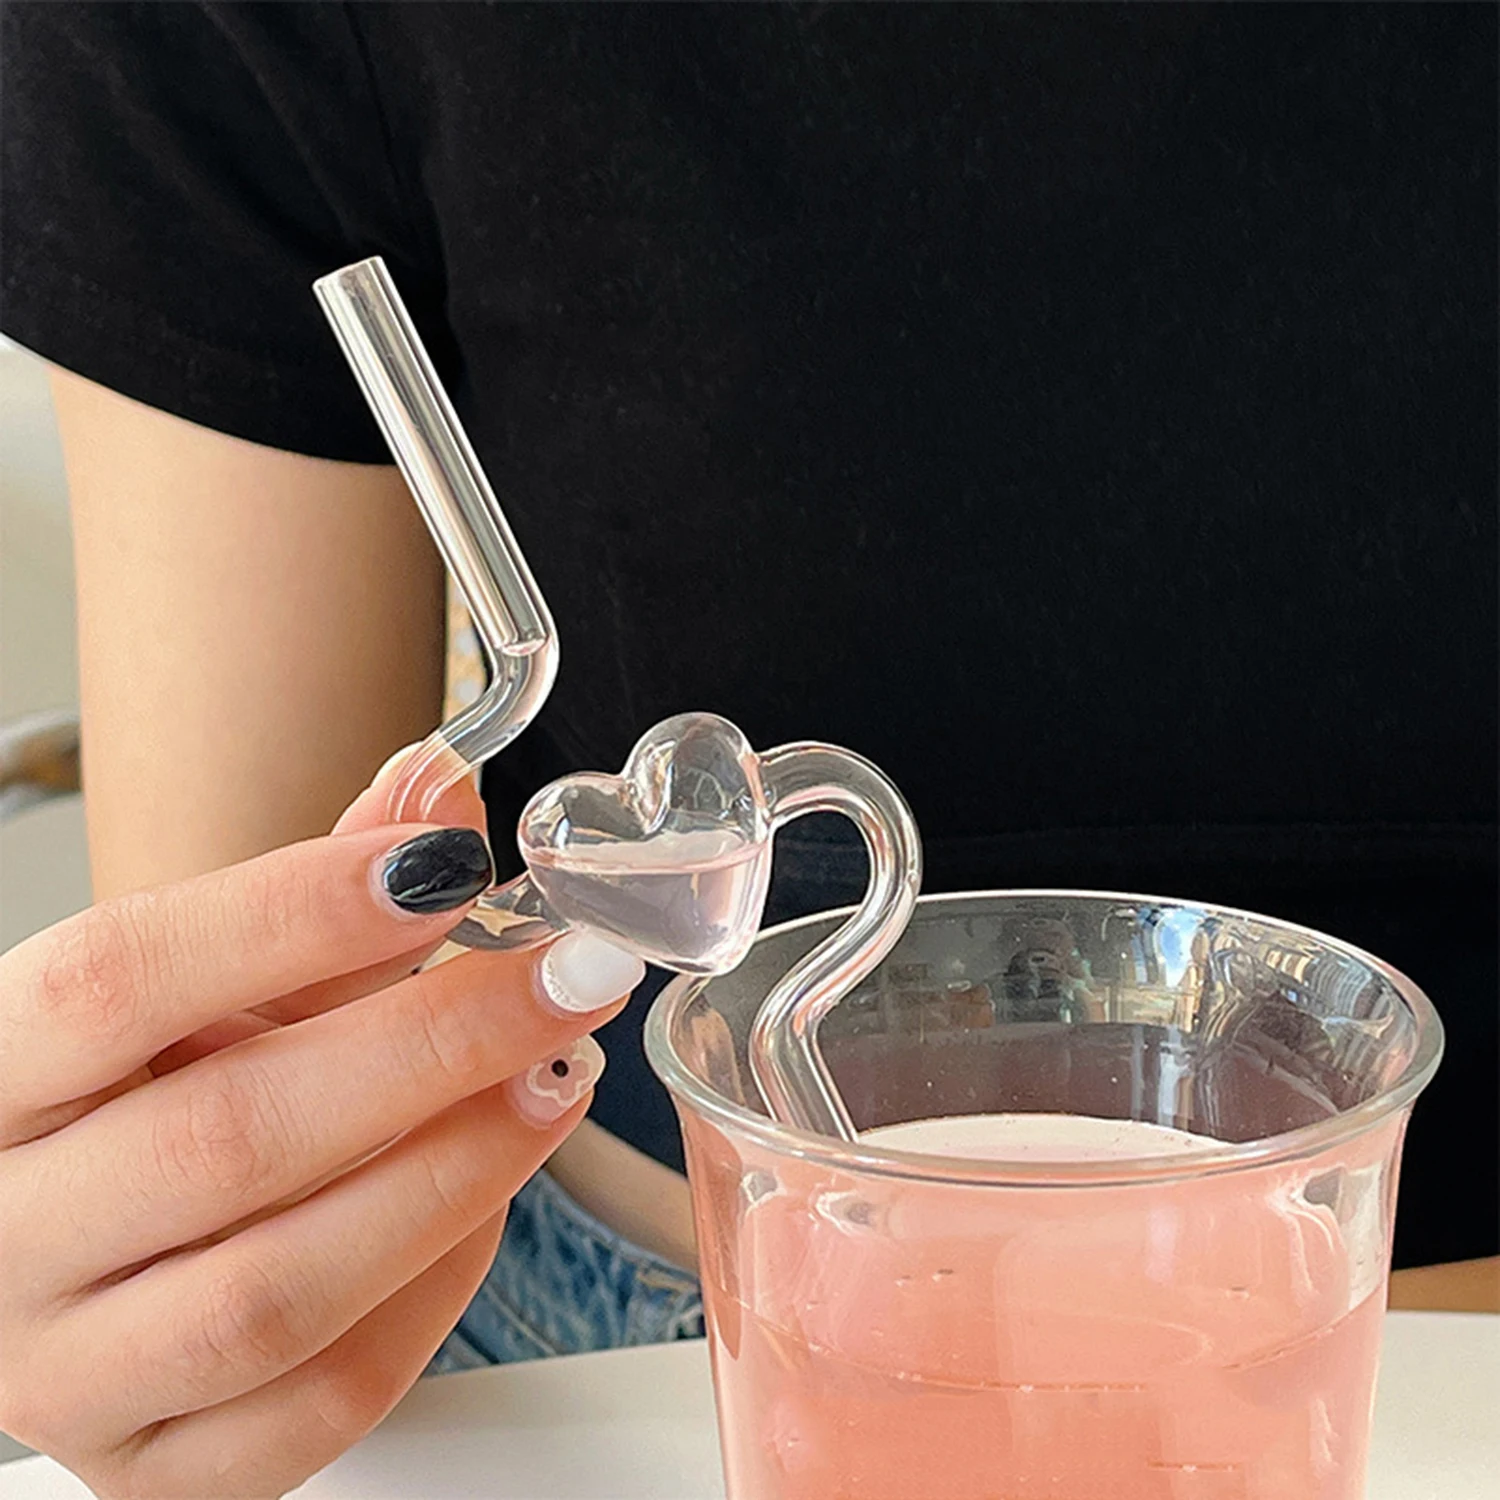 https://ae01.alicdn.com/kf/S69668e860995479e98f5ddf678820d20c/Reusable-Love-Straw-Heart-Glass-Straw-Glass-Drinking-Straws-Bubble-Tea-Straws-Cocktails-Bar-Accessories.jpg